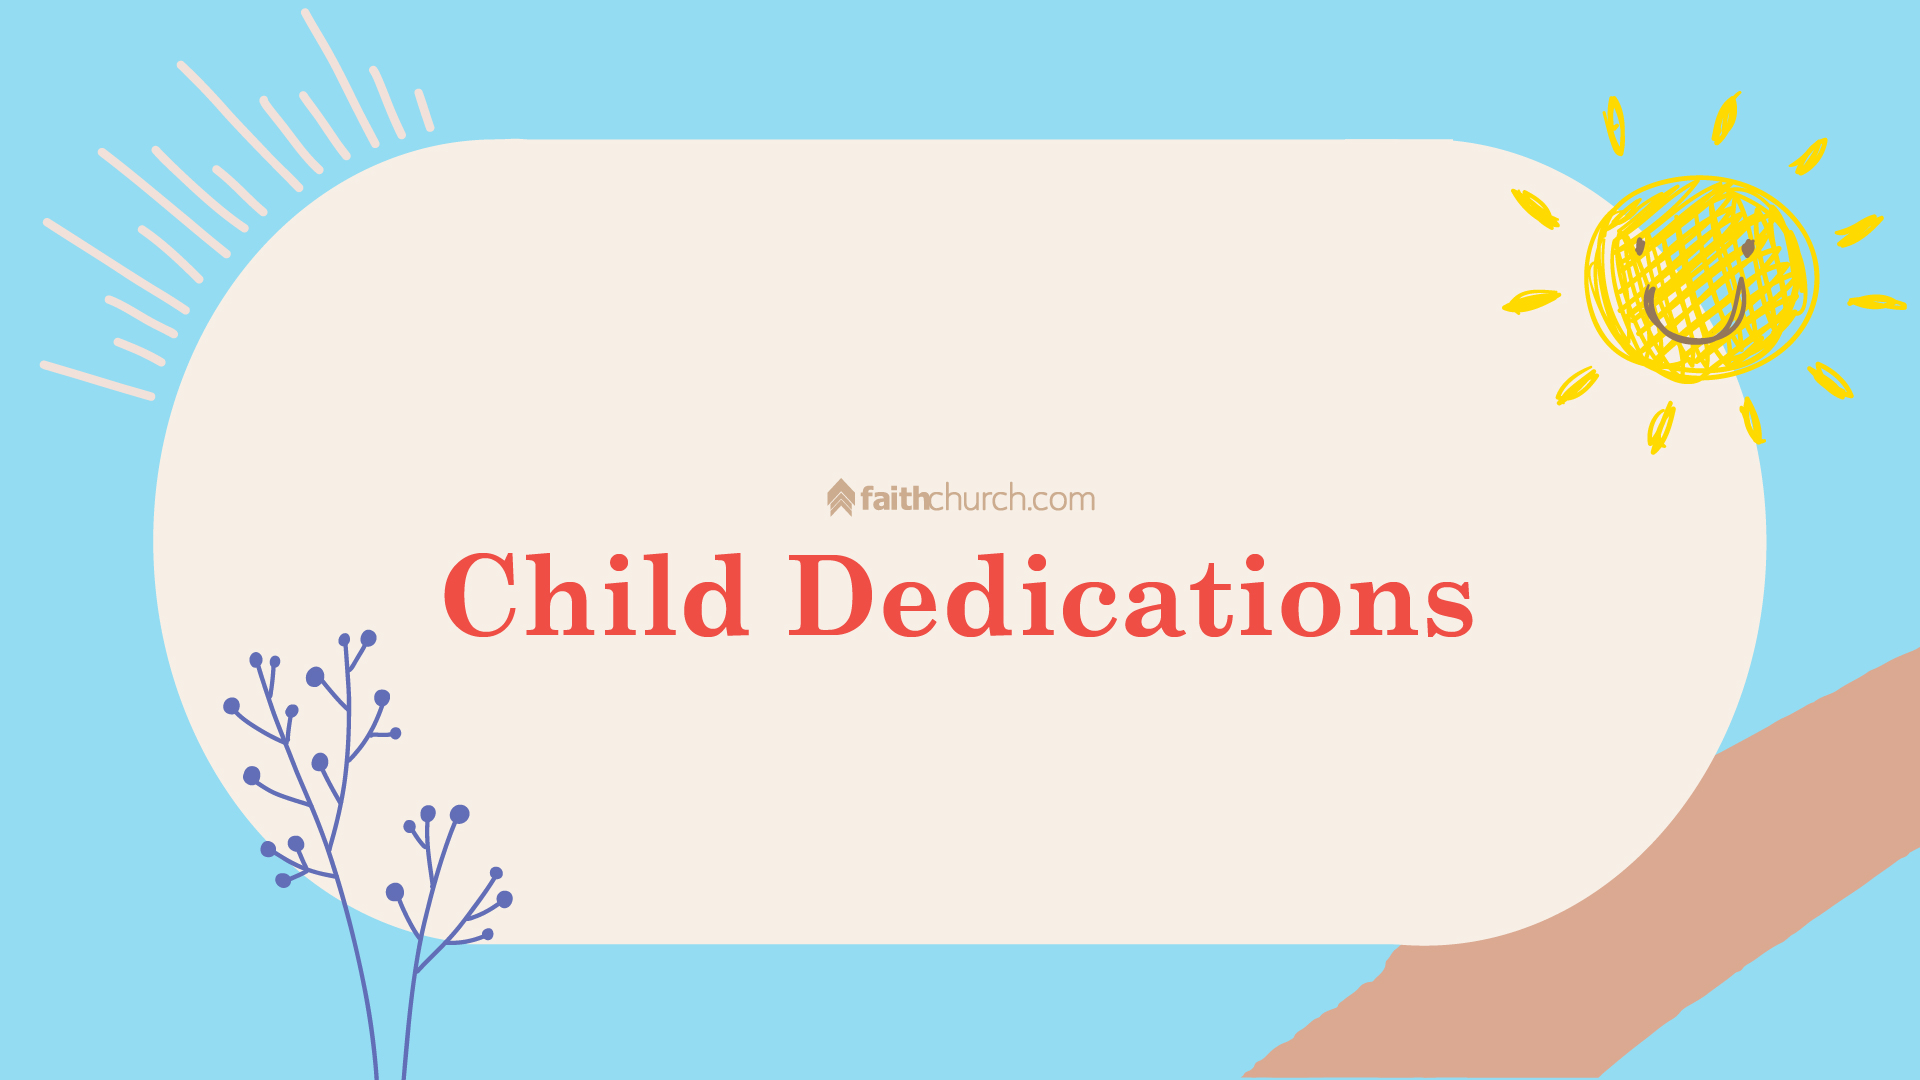 Child Dedication May 20 & 21